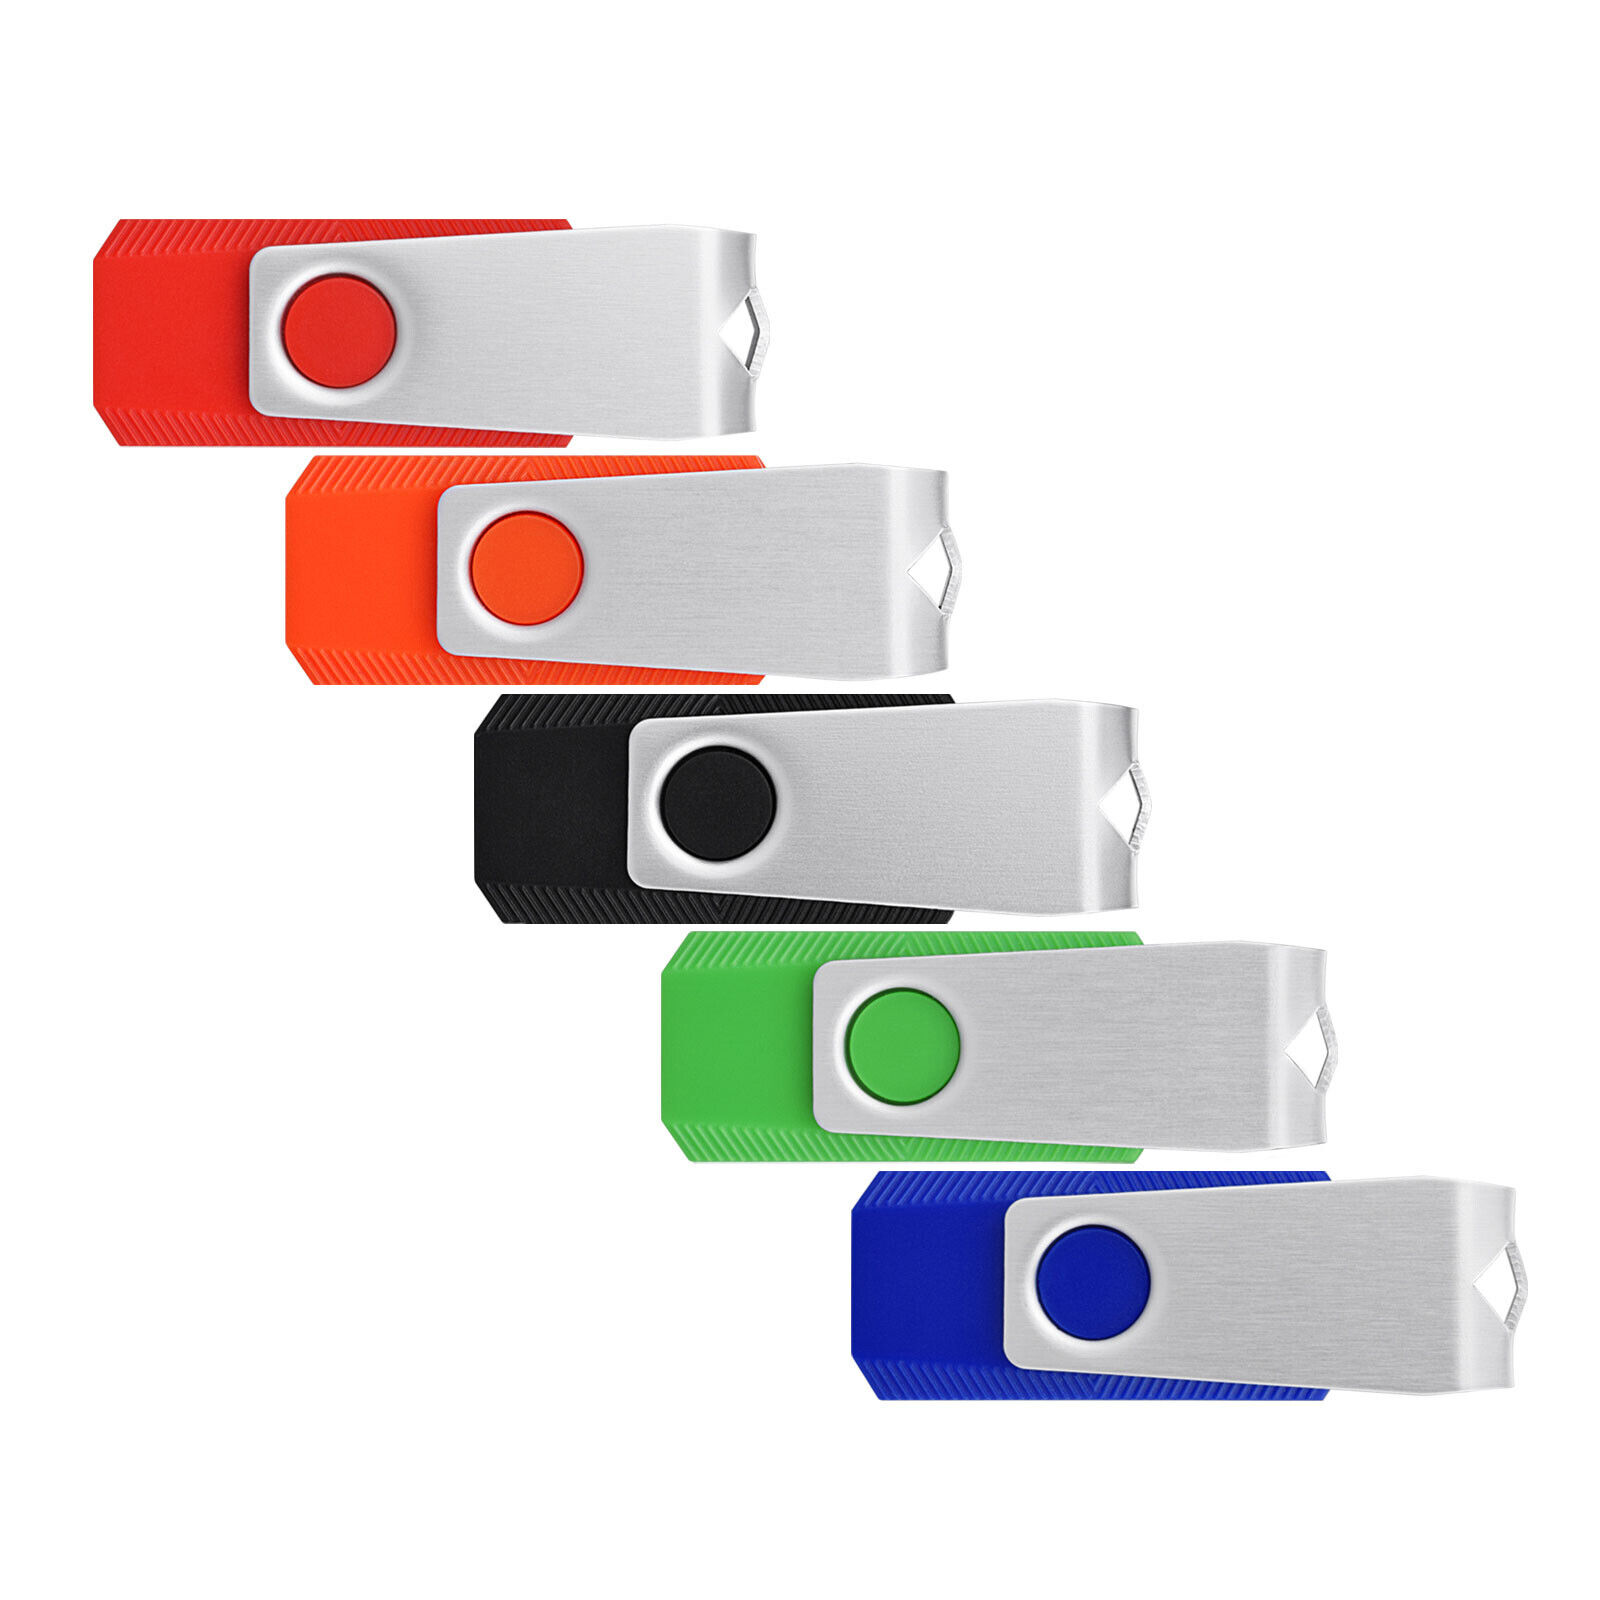 Mixed Color Lot 5/10pcs 1GB-64GB USB 2.0 Flash Drives Memory Storage USB Drive 